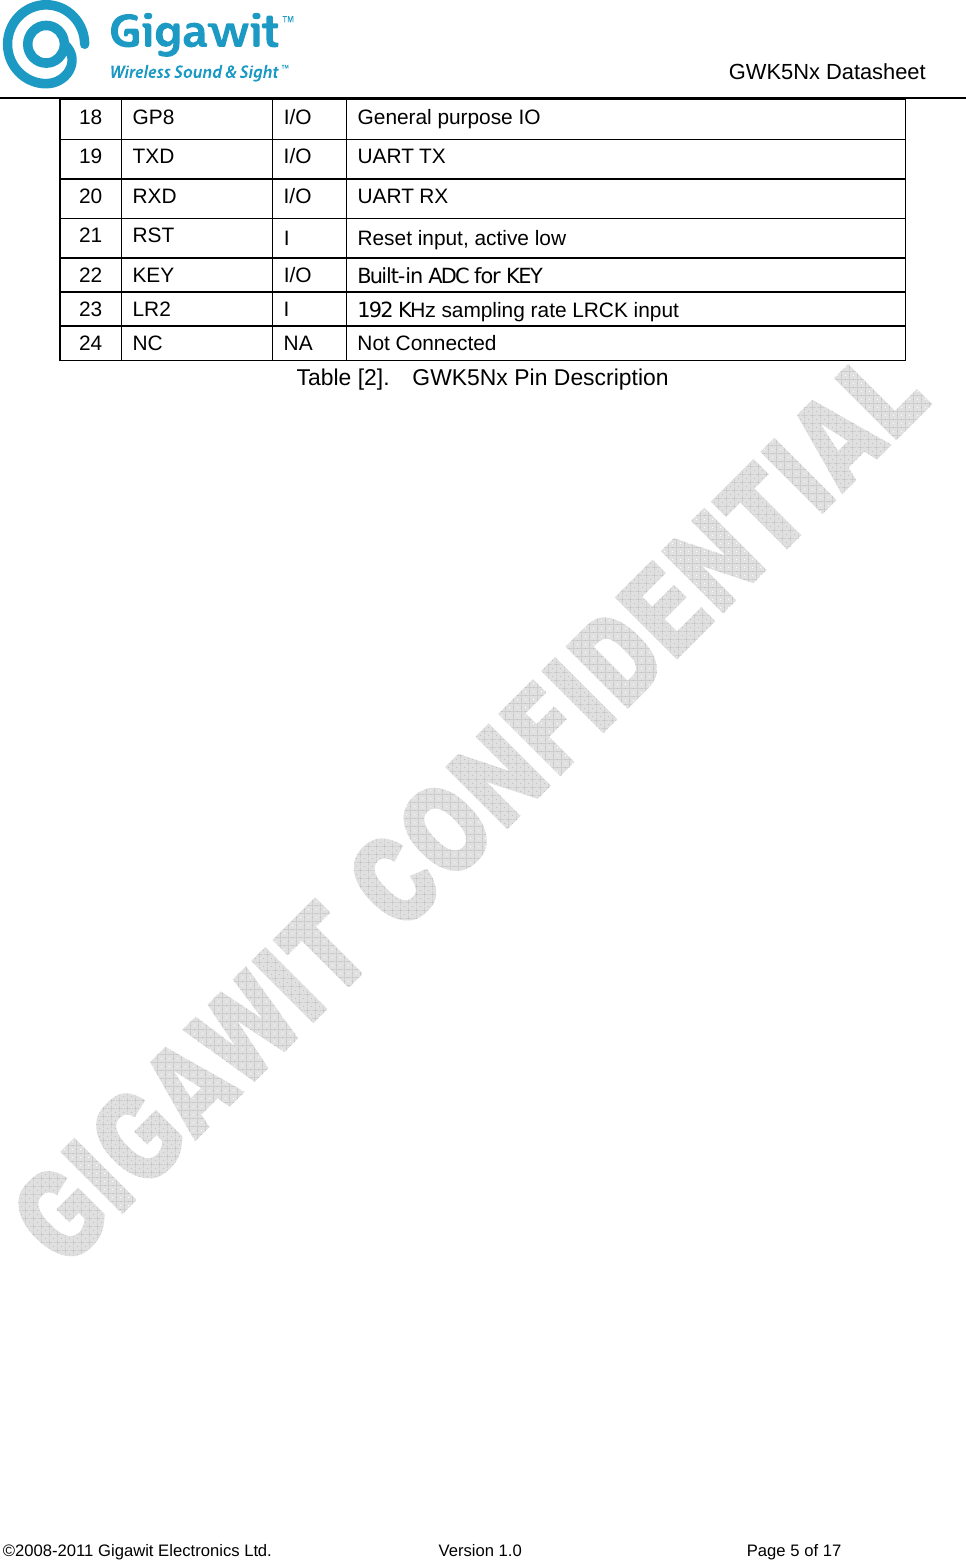                               ©2008-2011 Gigawit Electronics Ltd.                    Version 1.0                           Page 5 of 17  GWK5Nx Datasheet   18  GP8  I/O  General purpose IO 19 TXD  I/O  UART TX 20 RXD  I/O  UART RX 21 RST  I  Reset input, active low 22 KEY  I/O  Built-in ADC for KEY 23 LR2  I  192 KHz sampling rate LRCK input 24 NC  NA  Not Connected Table [2].    GWK5Nx Pin Description  